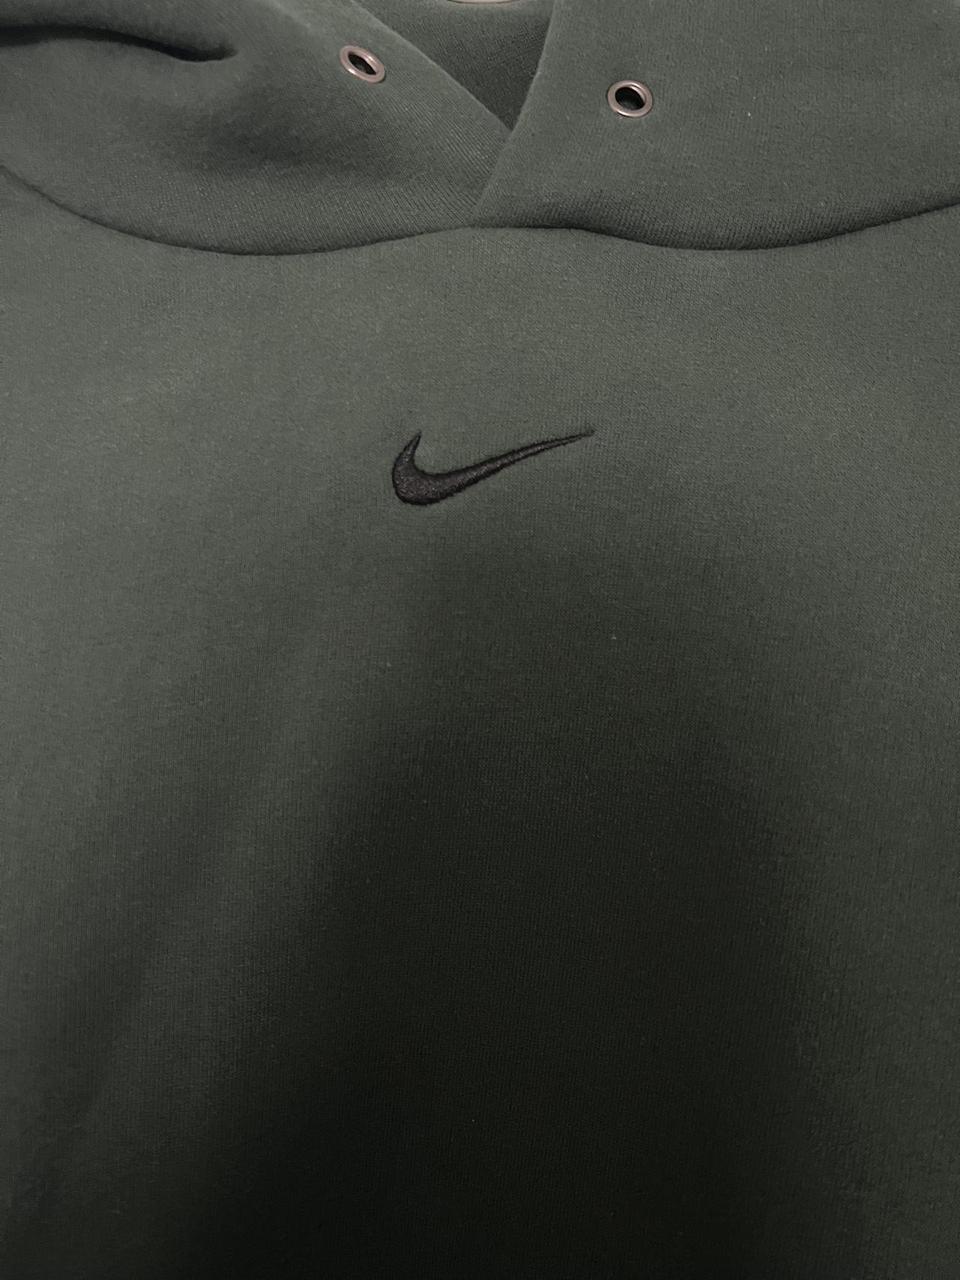 Green and black Nike middle swoosh hoodie men’s size... - Depop